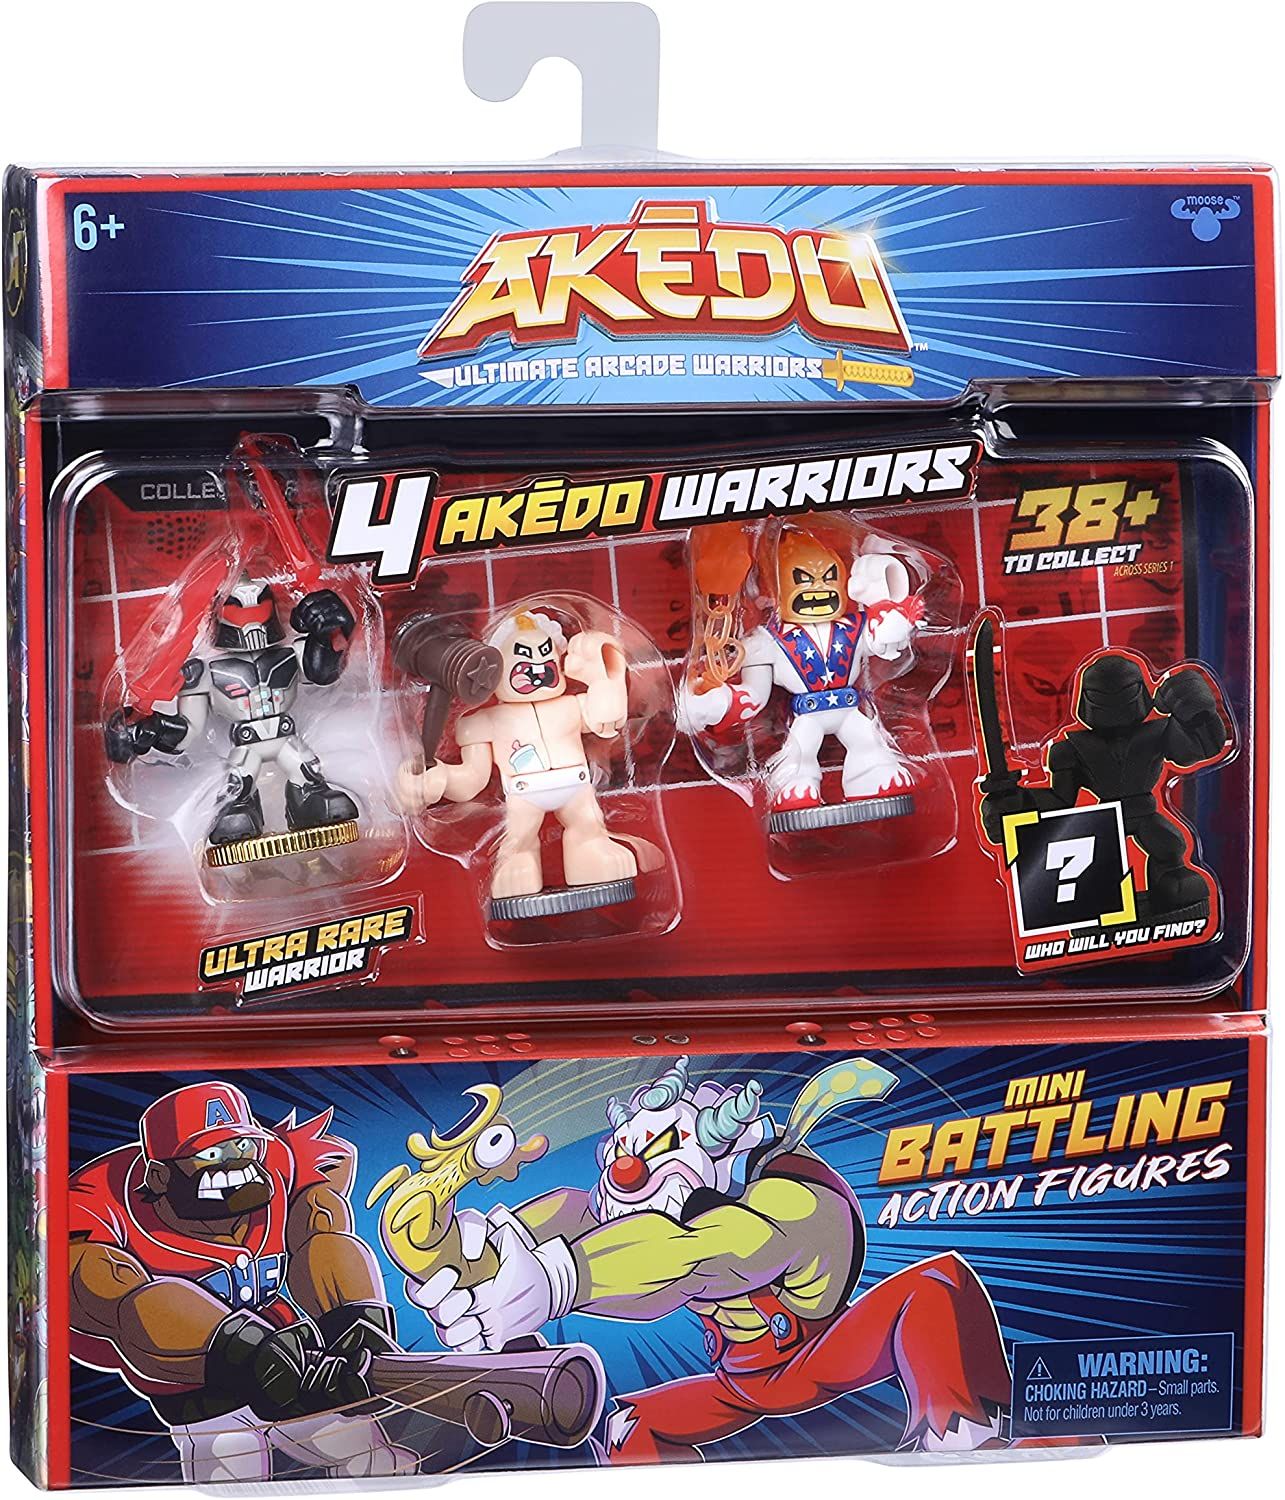 Akedo Ultimate Arcade Warriors Mini Battle Action Figure - Your